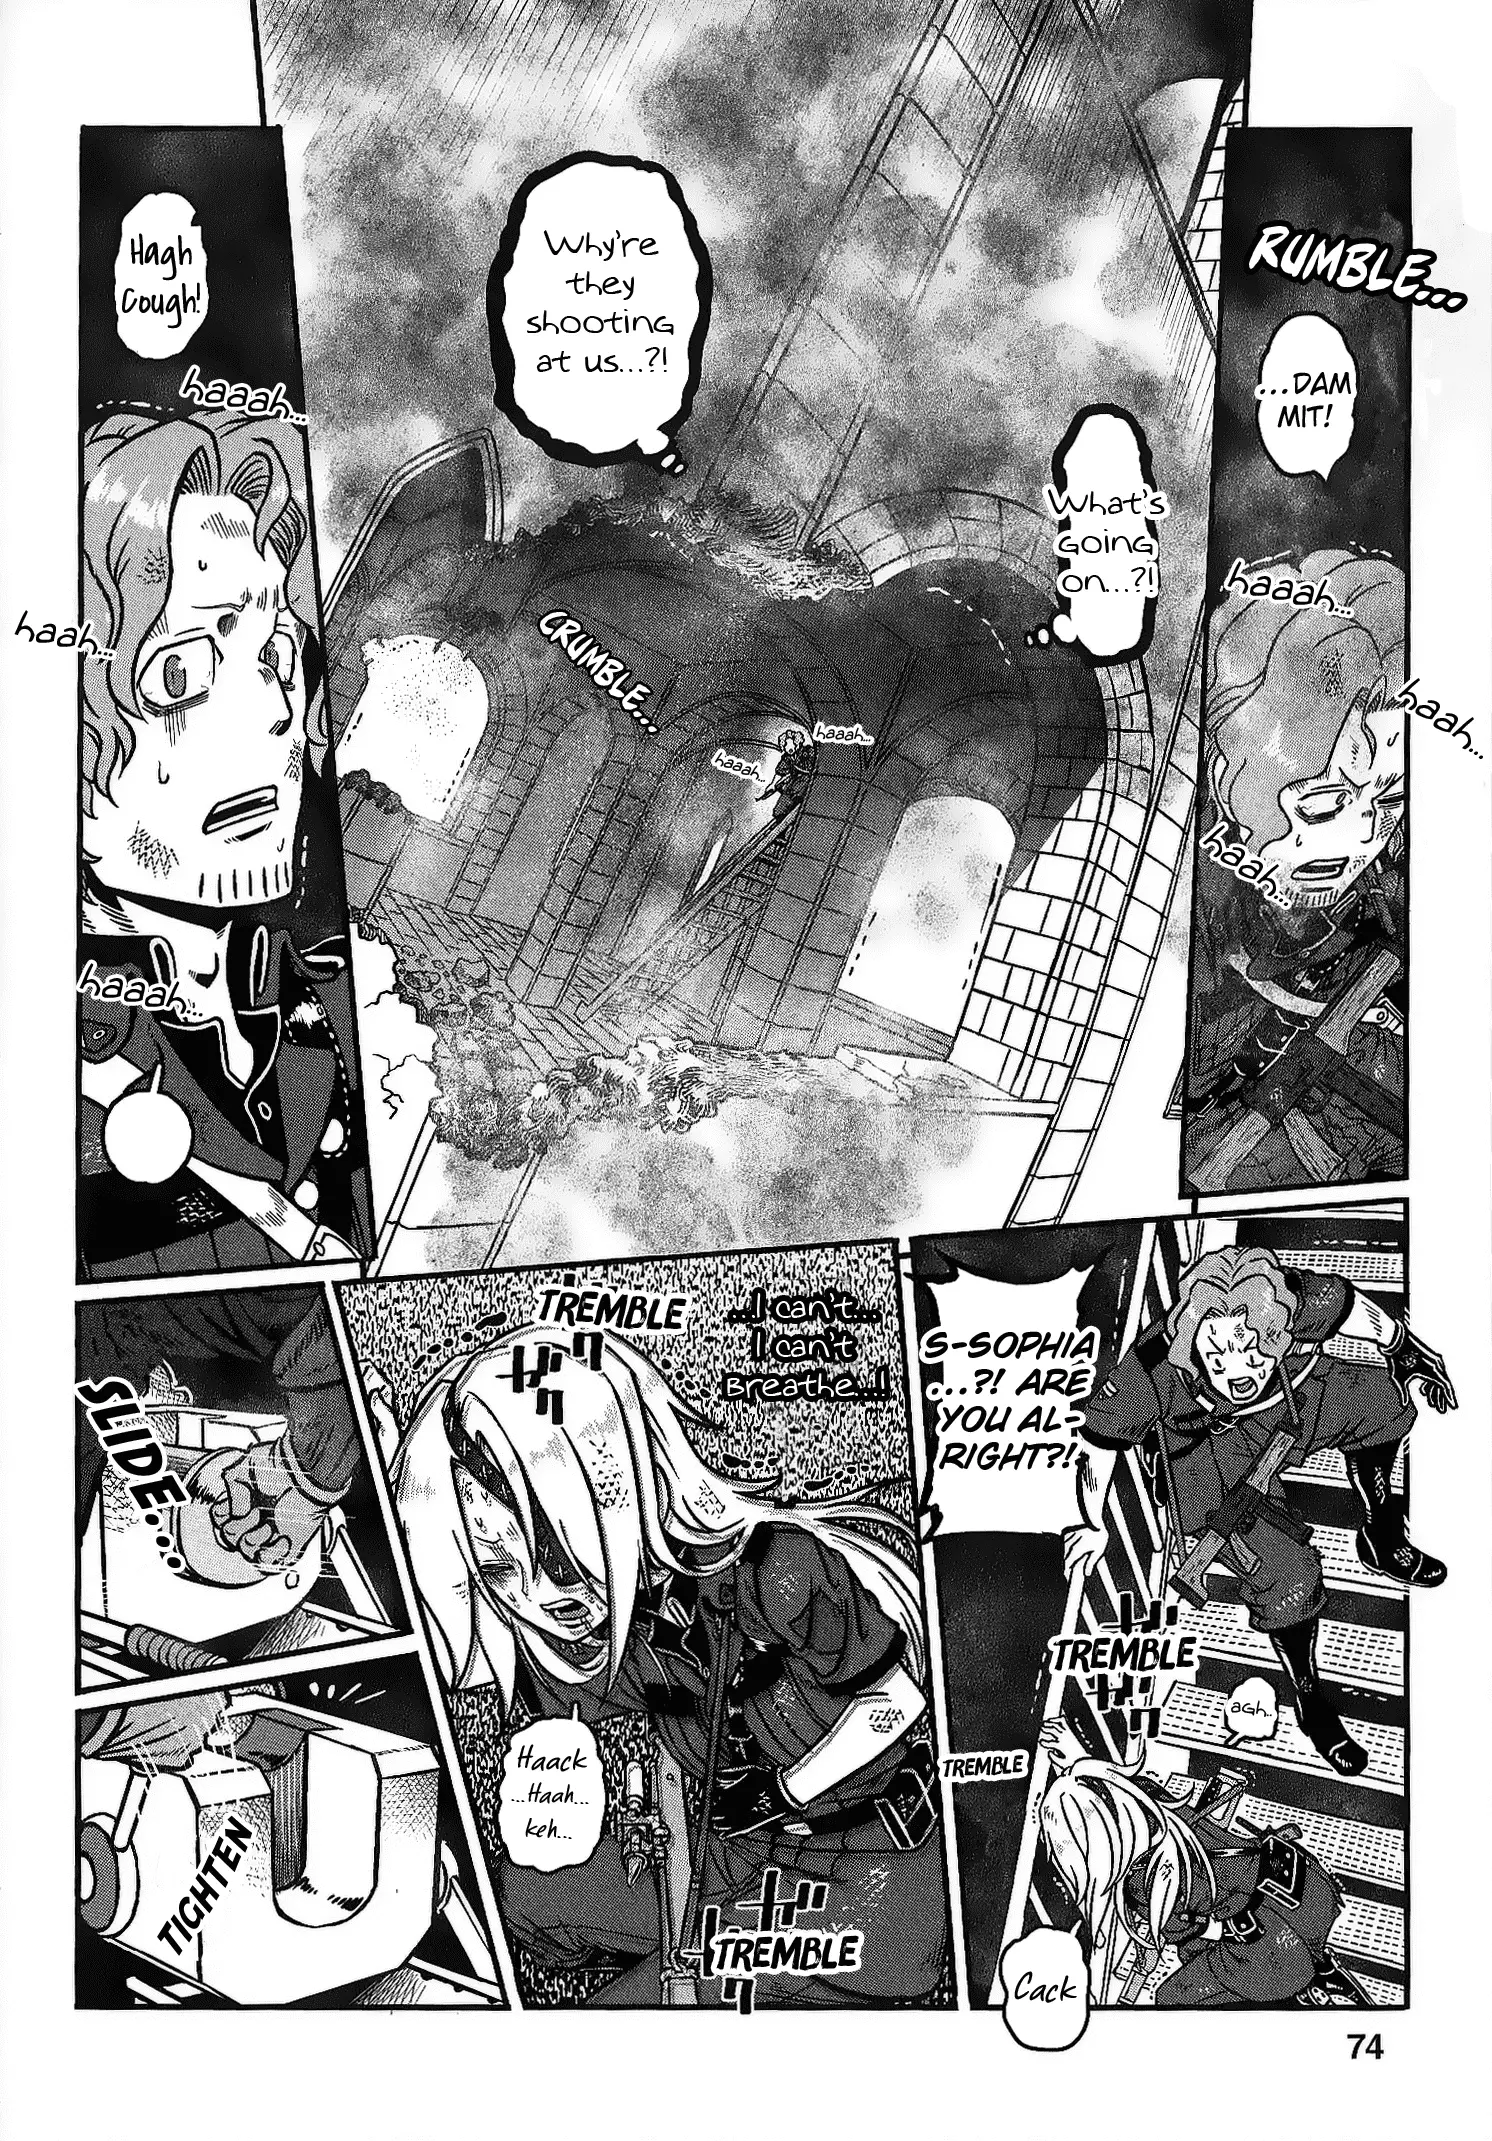 Groundless - Sekigan No Sogekihei - 22 page 75-9809e80c